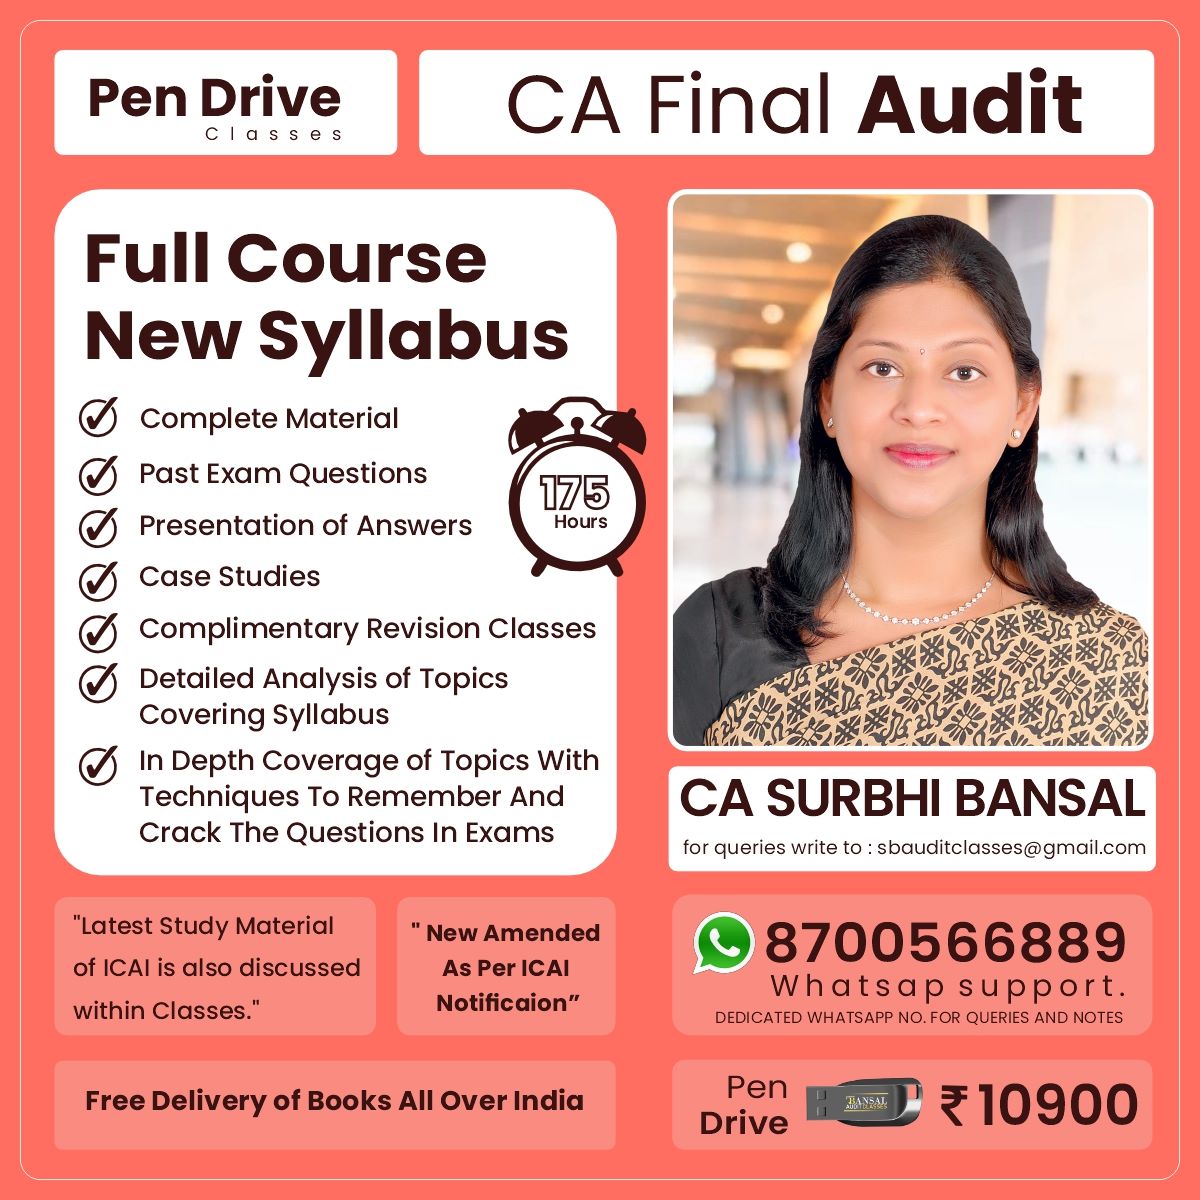 pen-drive-classes-for-ca-final-audit---by-ca-surbhi-bansal---new-syllabus)